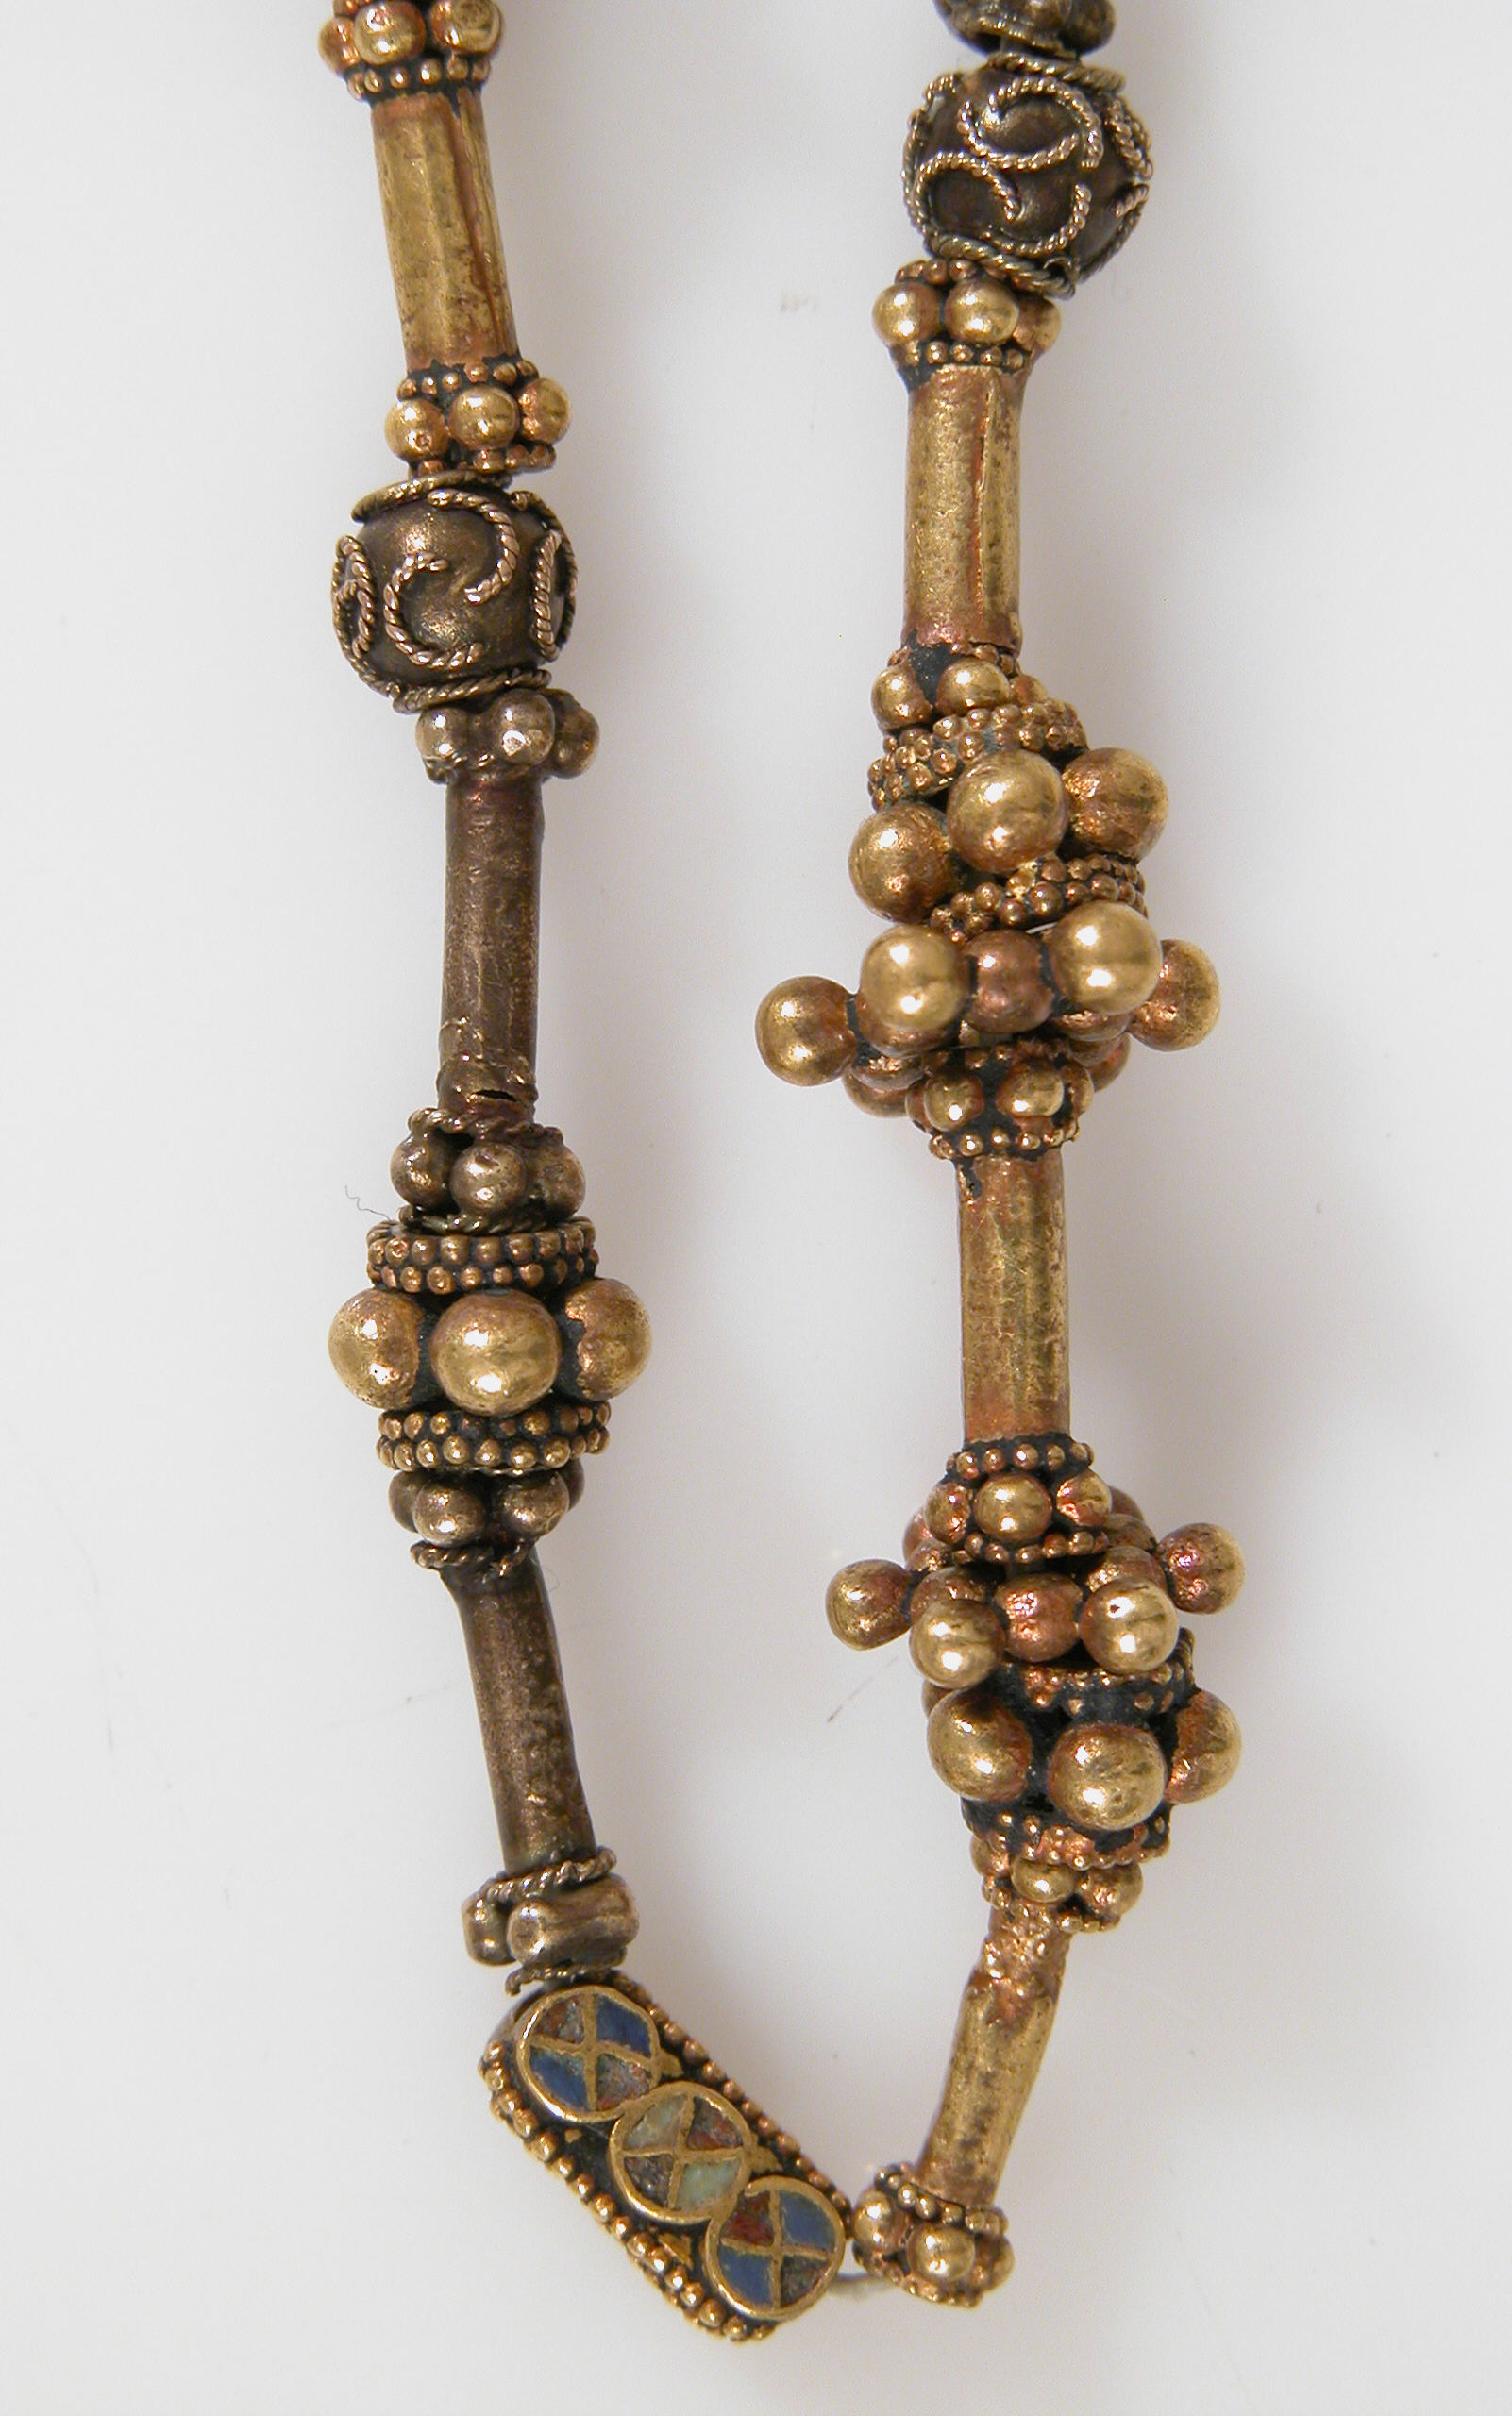 Necklace | Byzantine | The Metropolitan Museum of Art